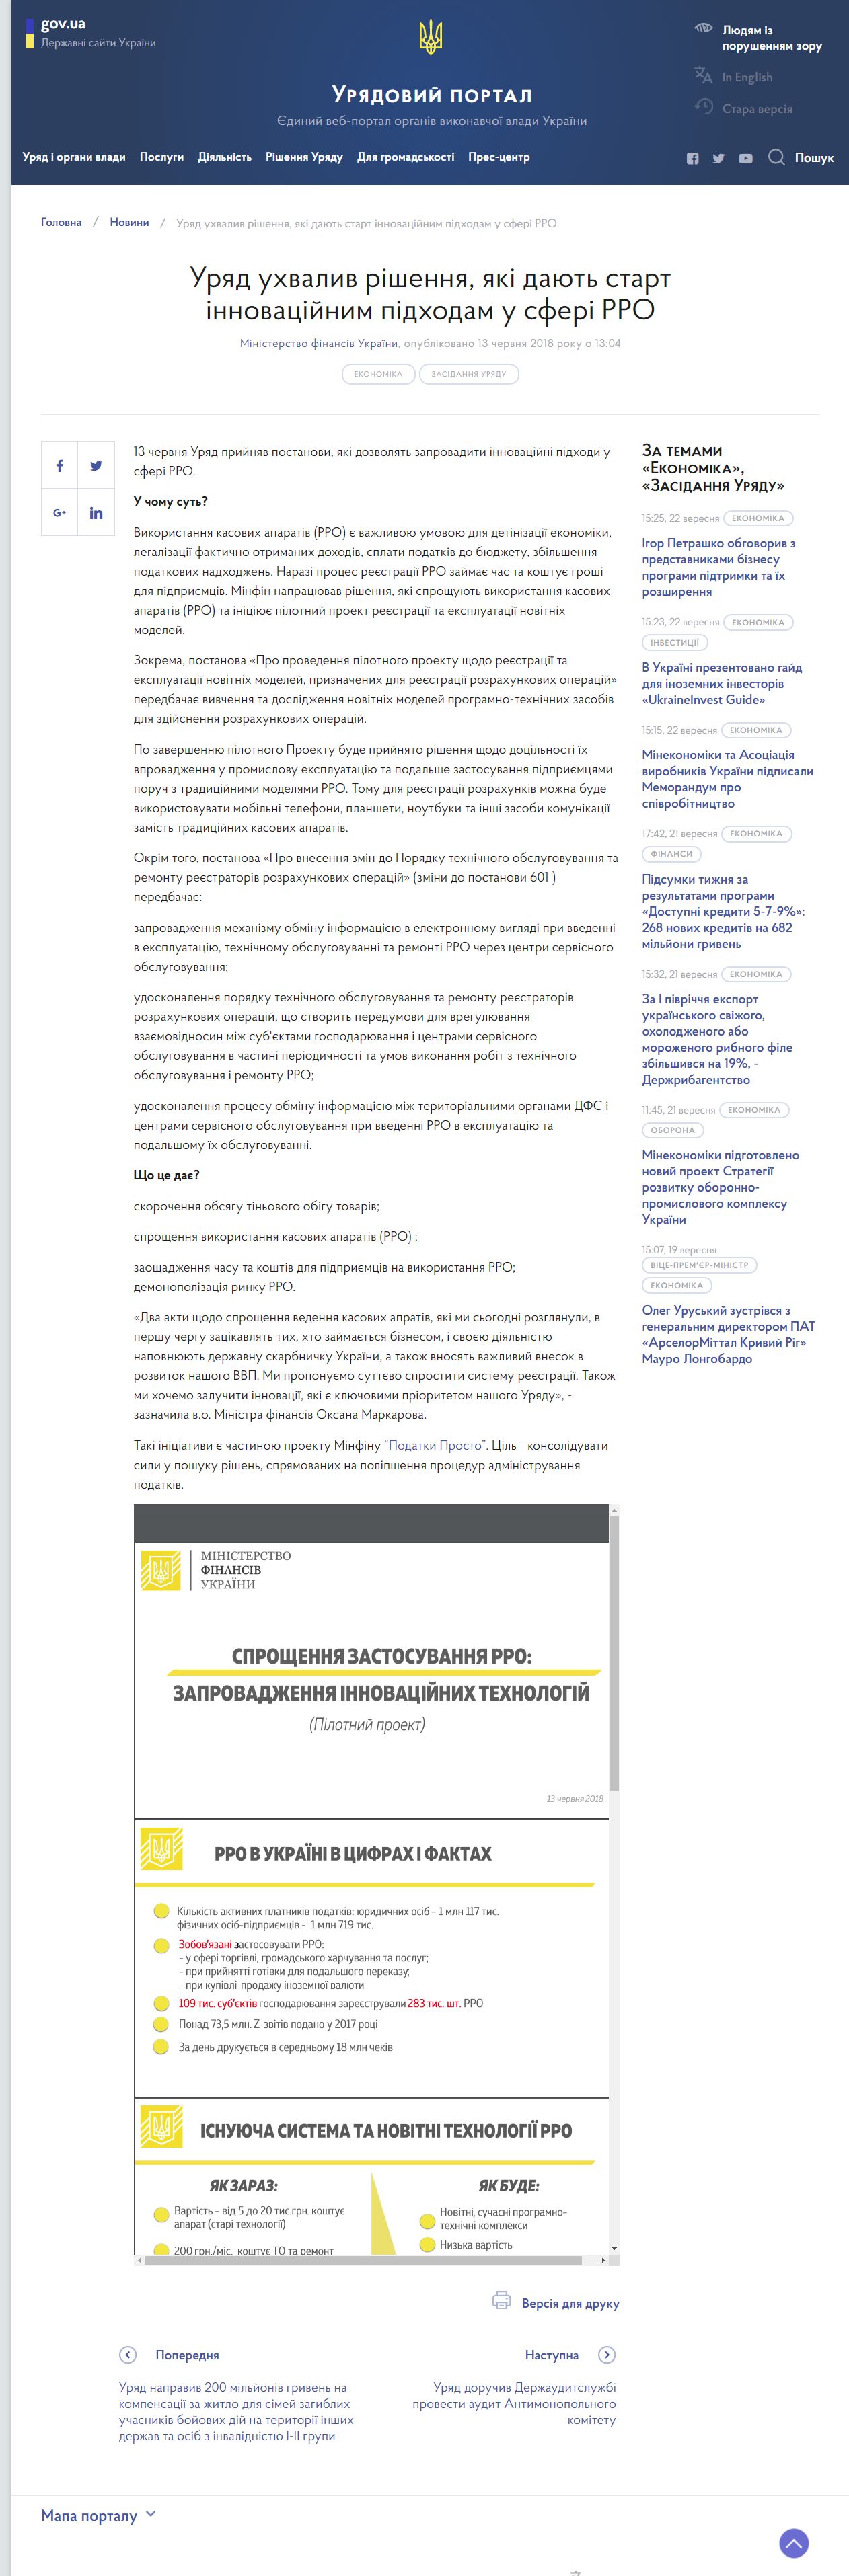 https://www.kmu.gov.ua/news/uryad-uhvaliv-rishennya-yaki-dayut-start-innovacijnim-pidhodam-u-sferi-rro